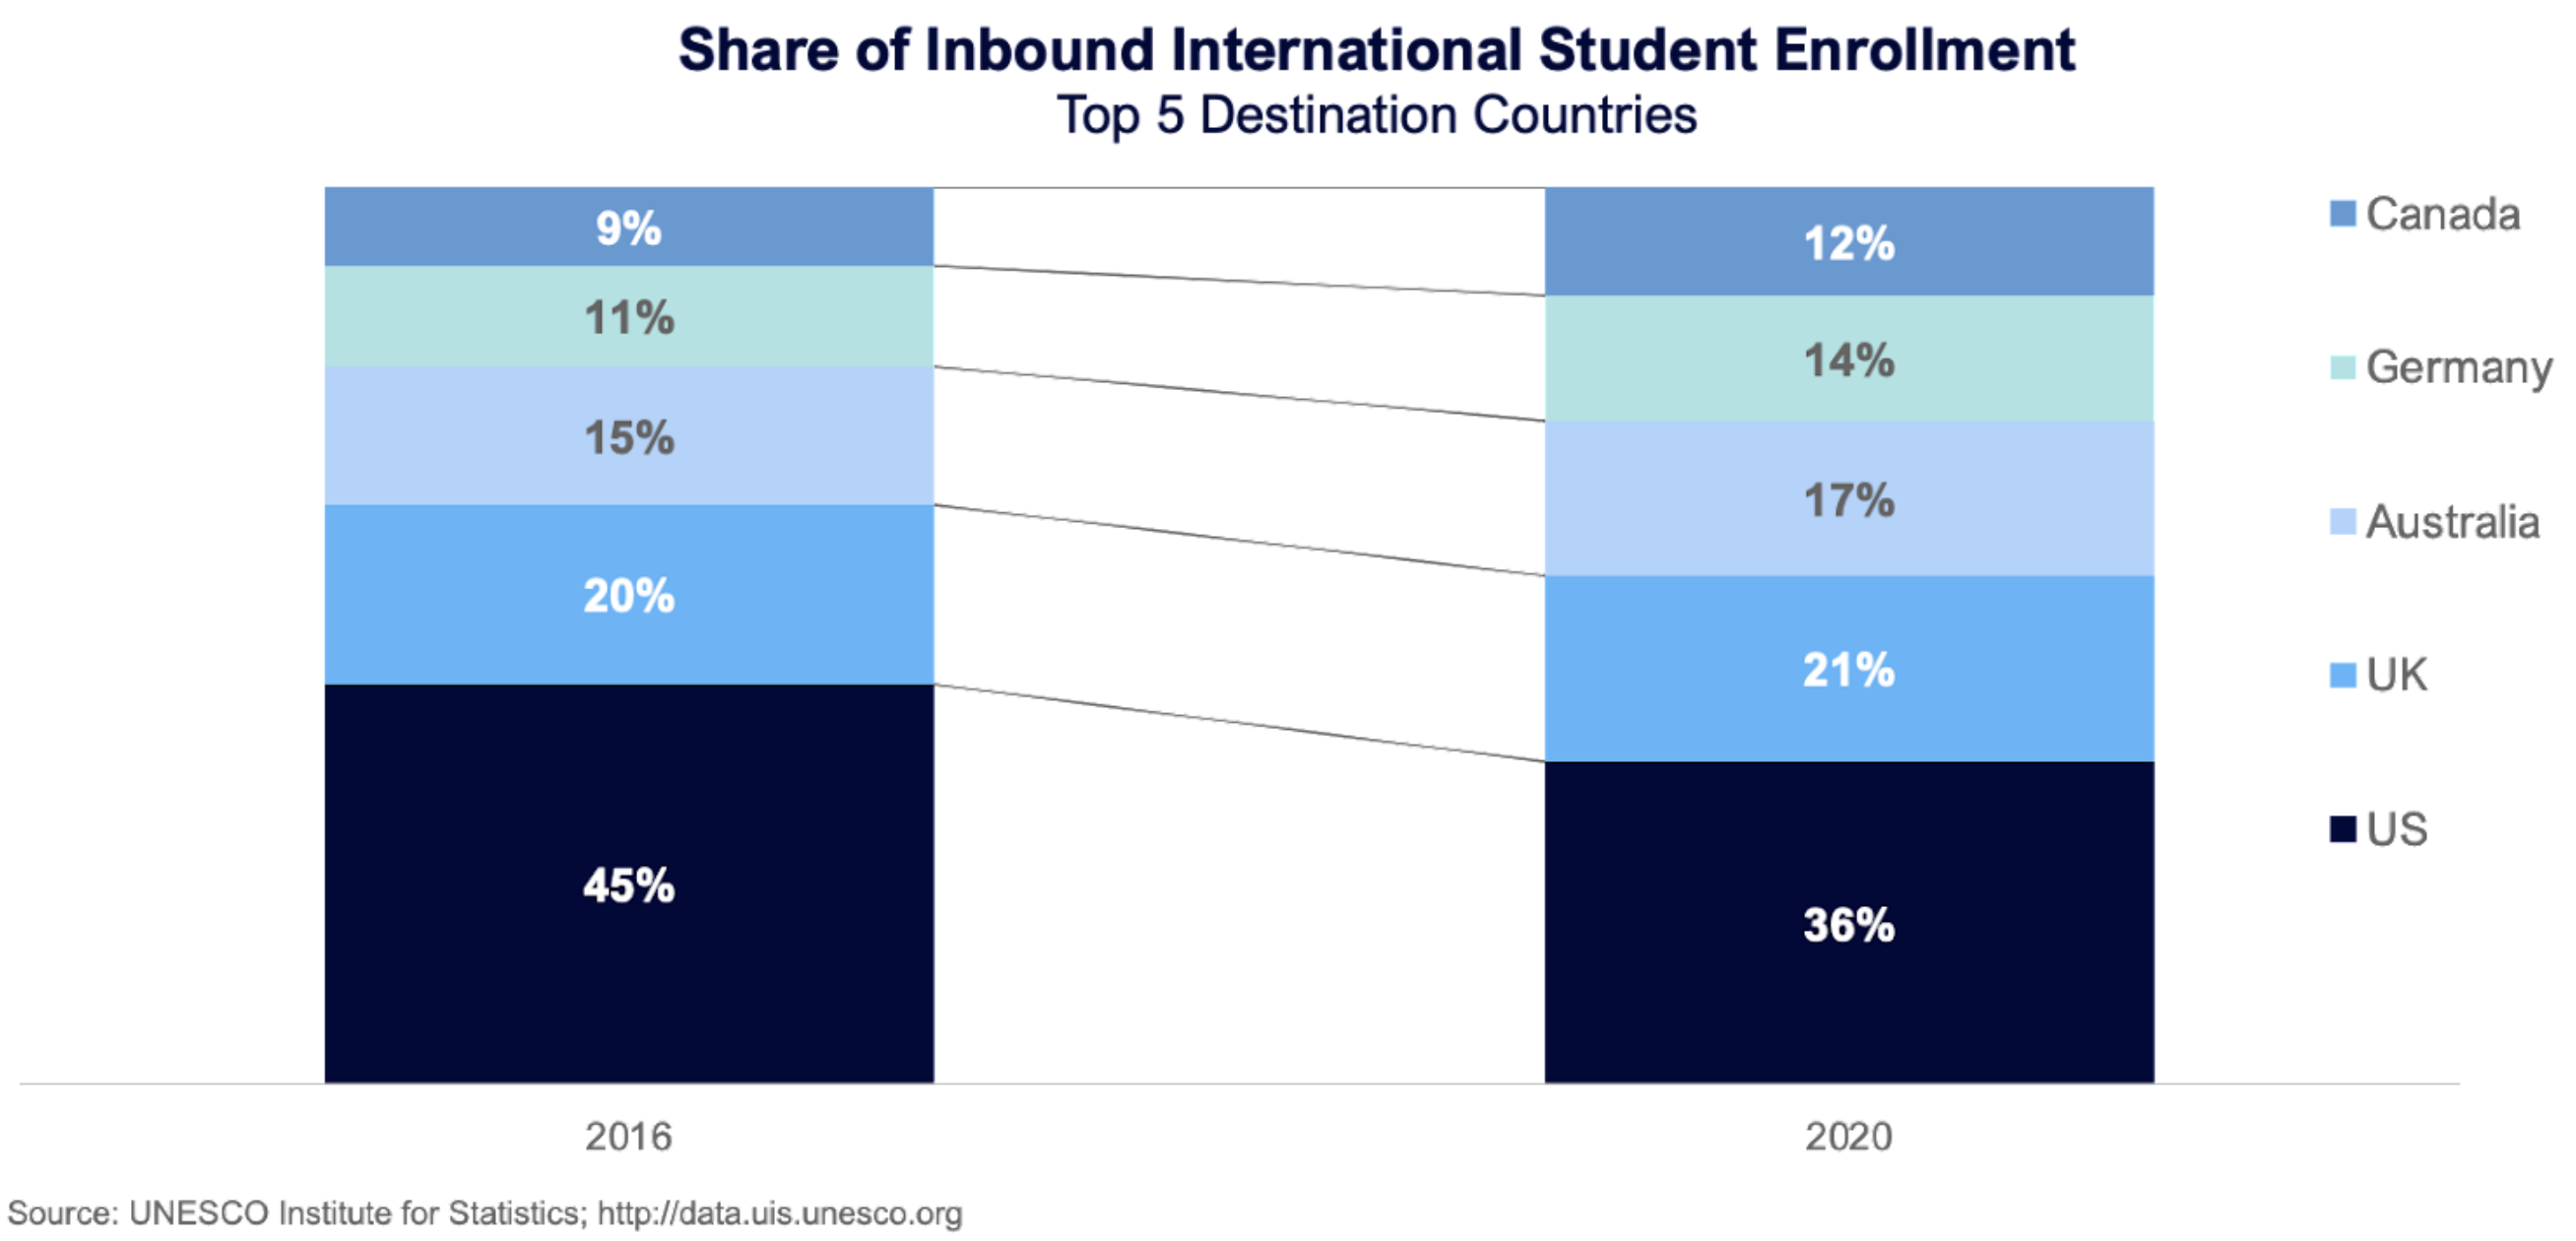 Share of Inbound International Student Enrollment (Top 5 Destination Countries)